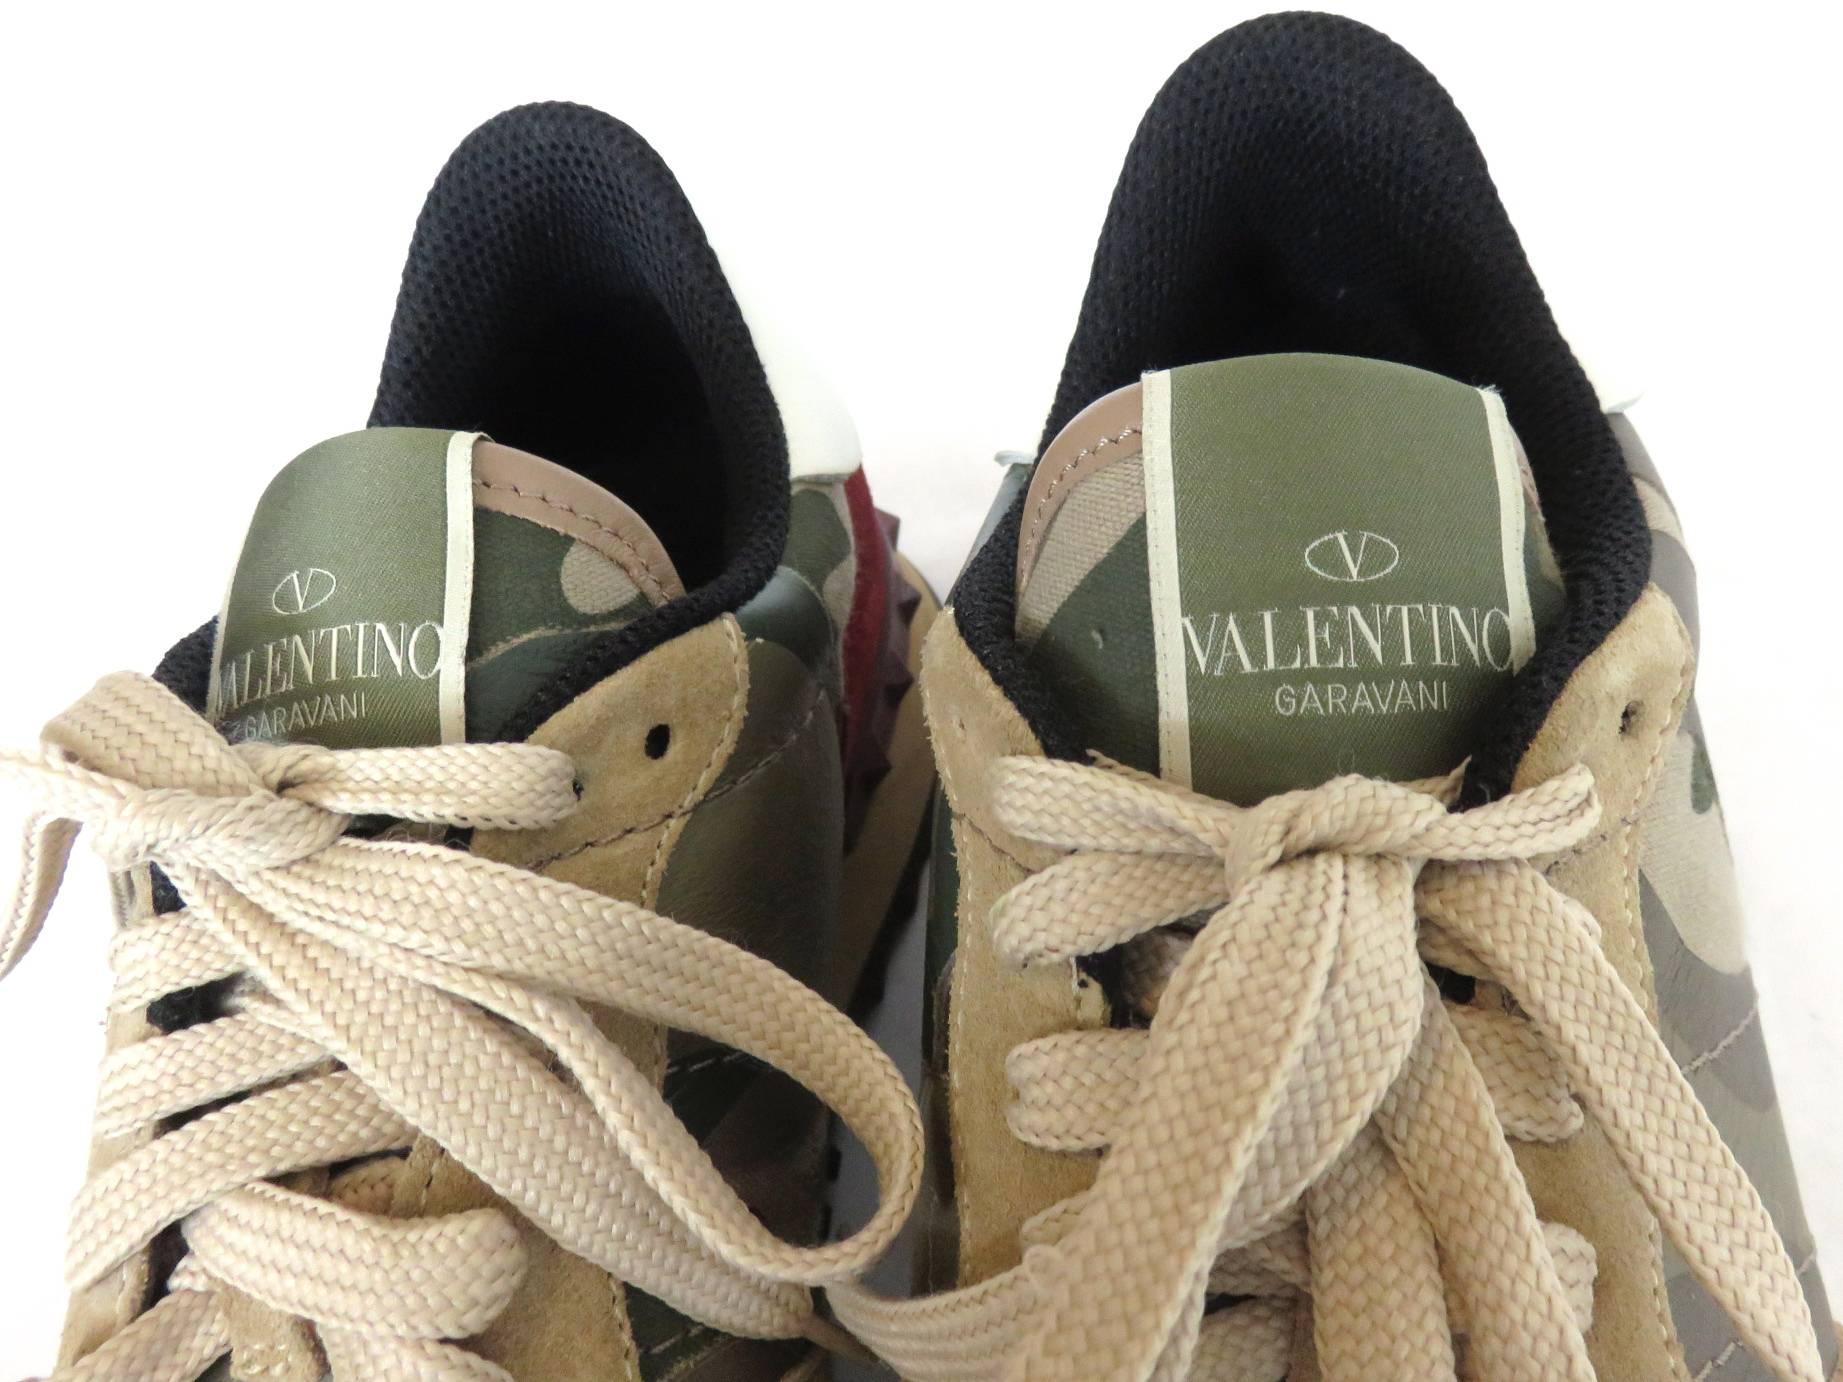 VALENTINO GARAVANI Men's Rockstud Camouflage sneakers trainers *worn once* 4